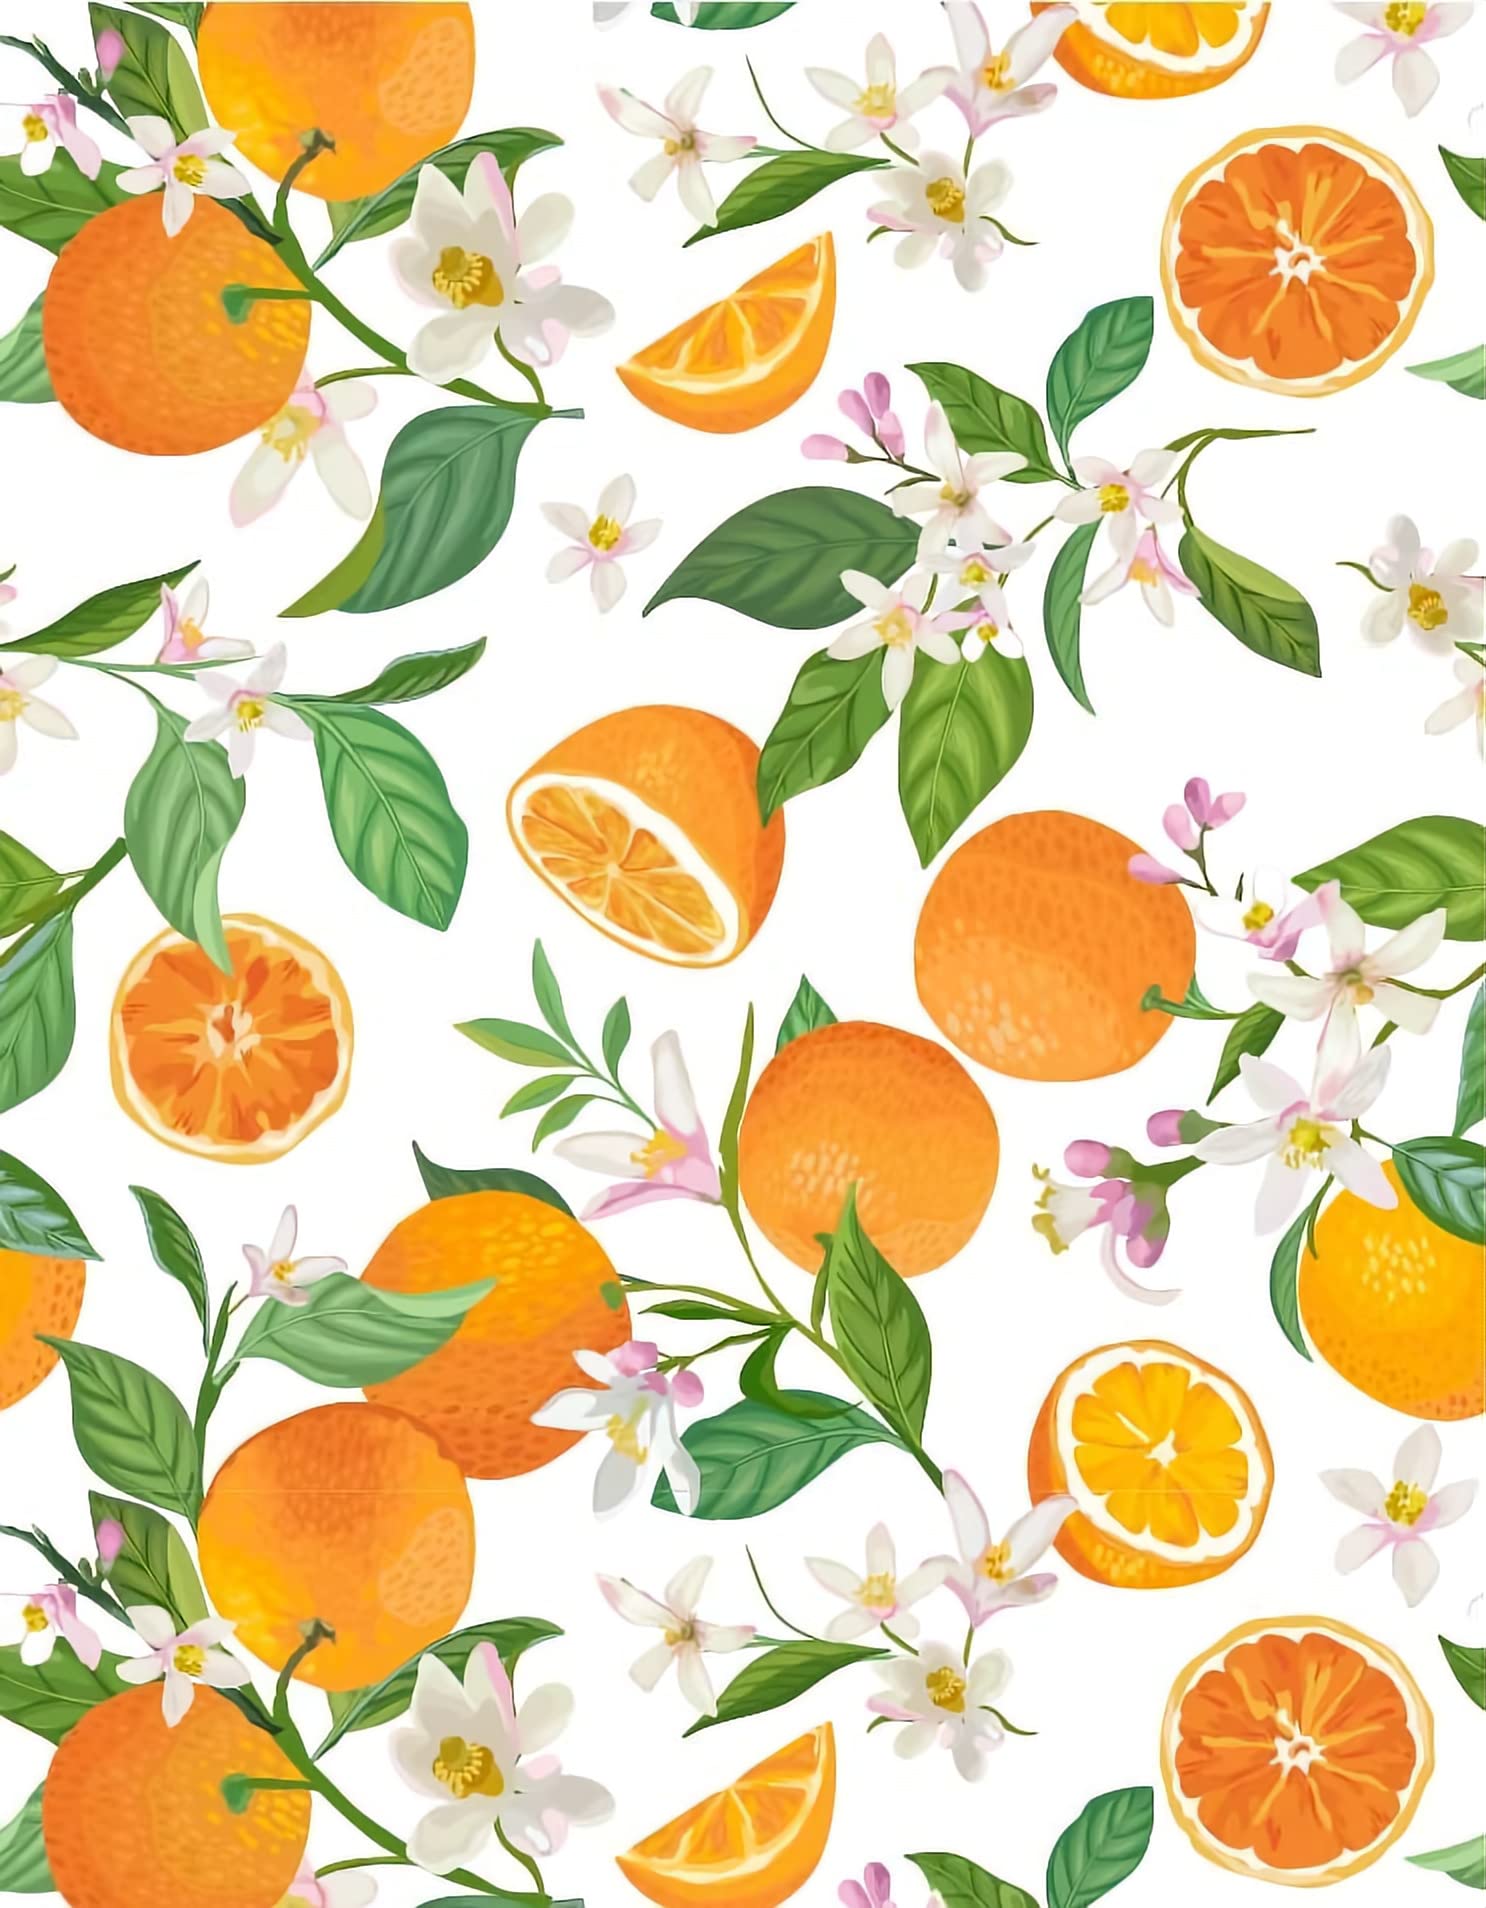 Meihodan Floral Peel And Stick Removable Wallpaper Oranges Kitchen Decor Summer Fruit Orange Blossoms Citrus Print Self Adhesive Wallpaper For Living Room Cabinet DIY Decor 17.7in X 9.8ft